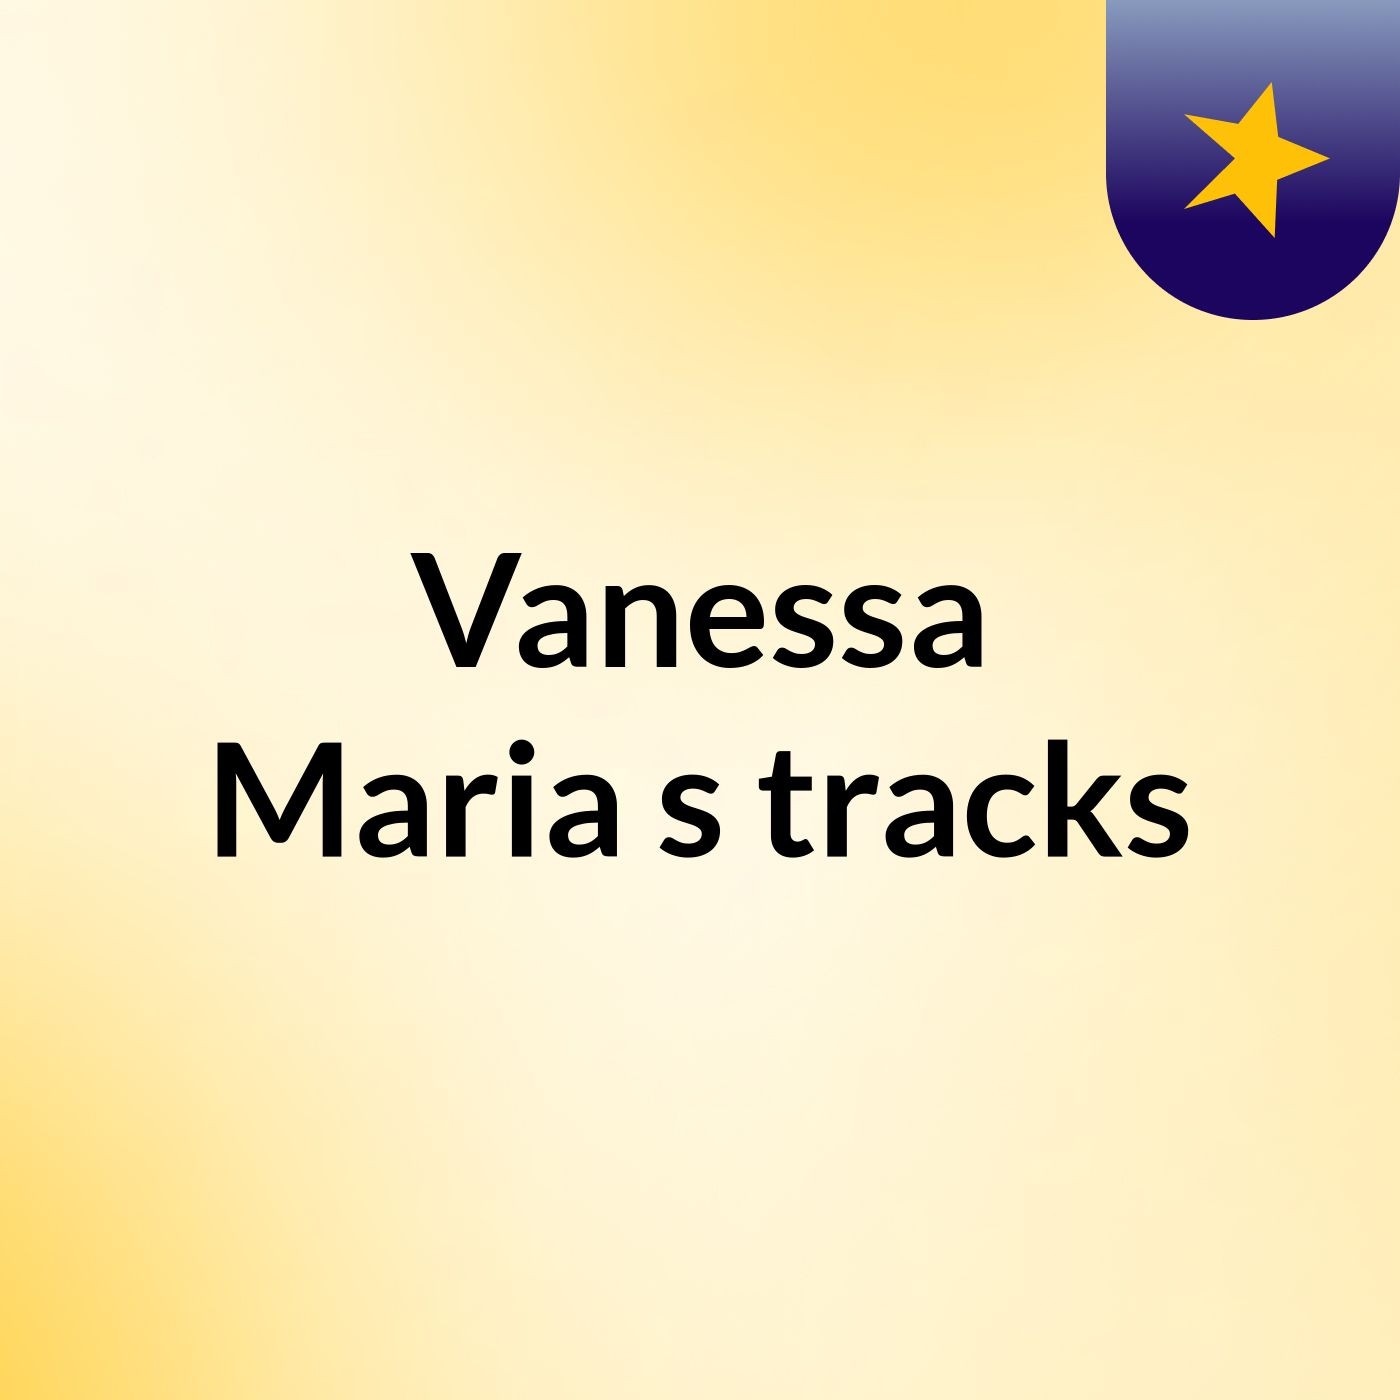 Vanessa Maria's tracks